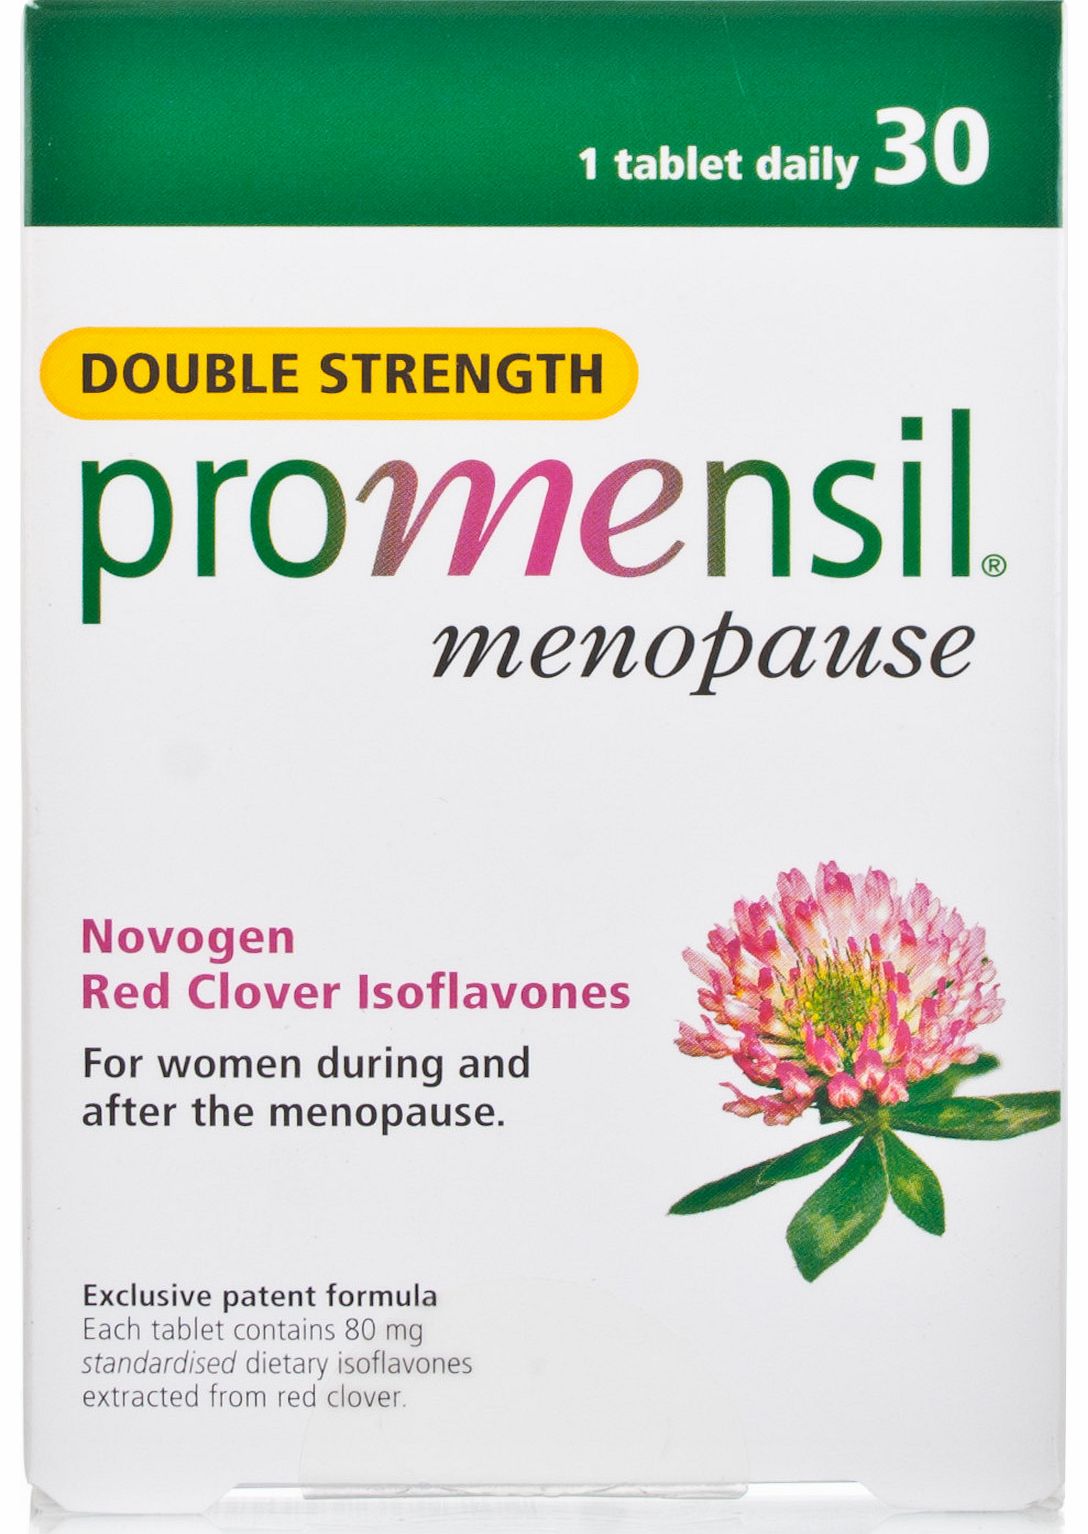 Promensil Menopause Double Strength